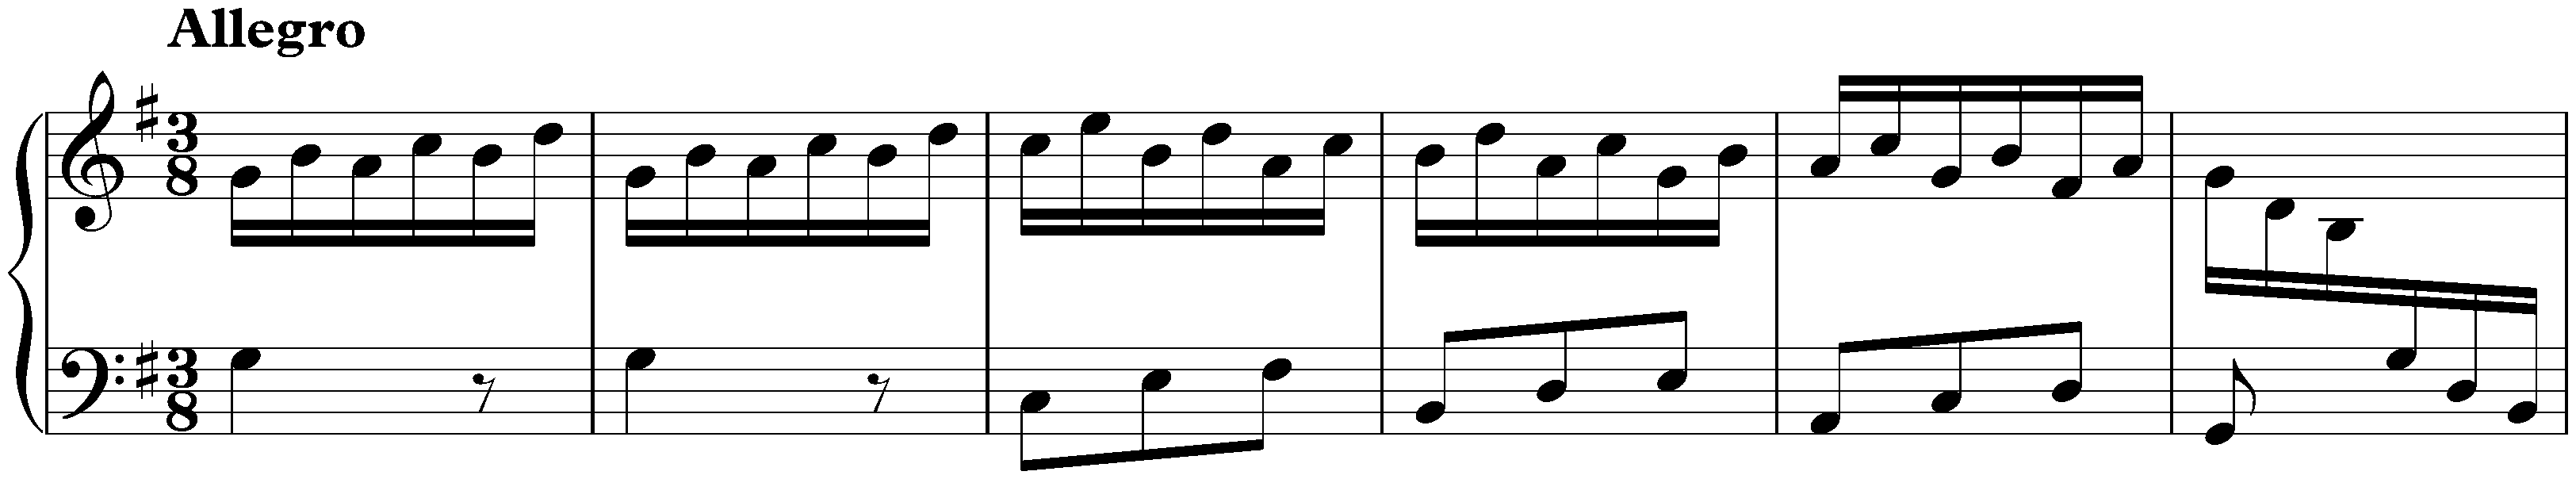 Sonatas found in Montserrat; 2. G major